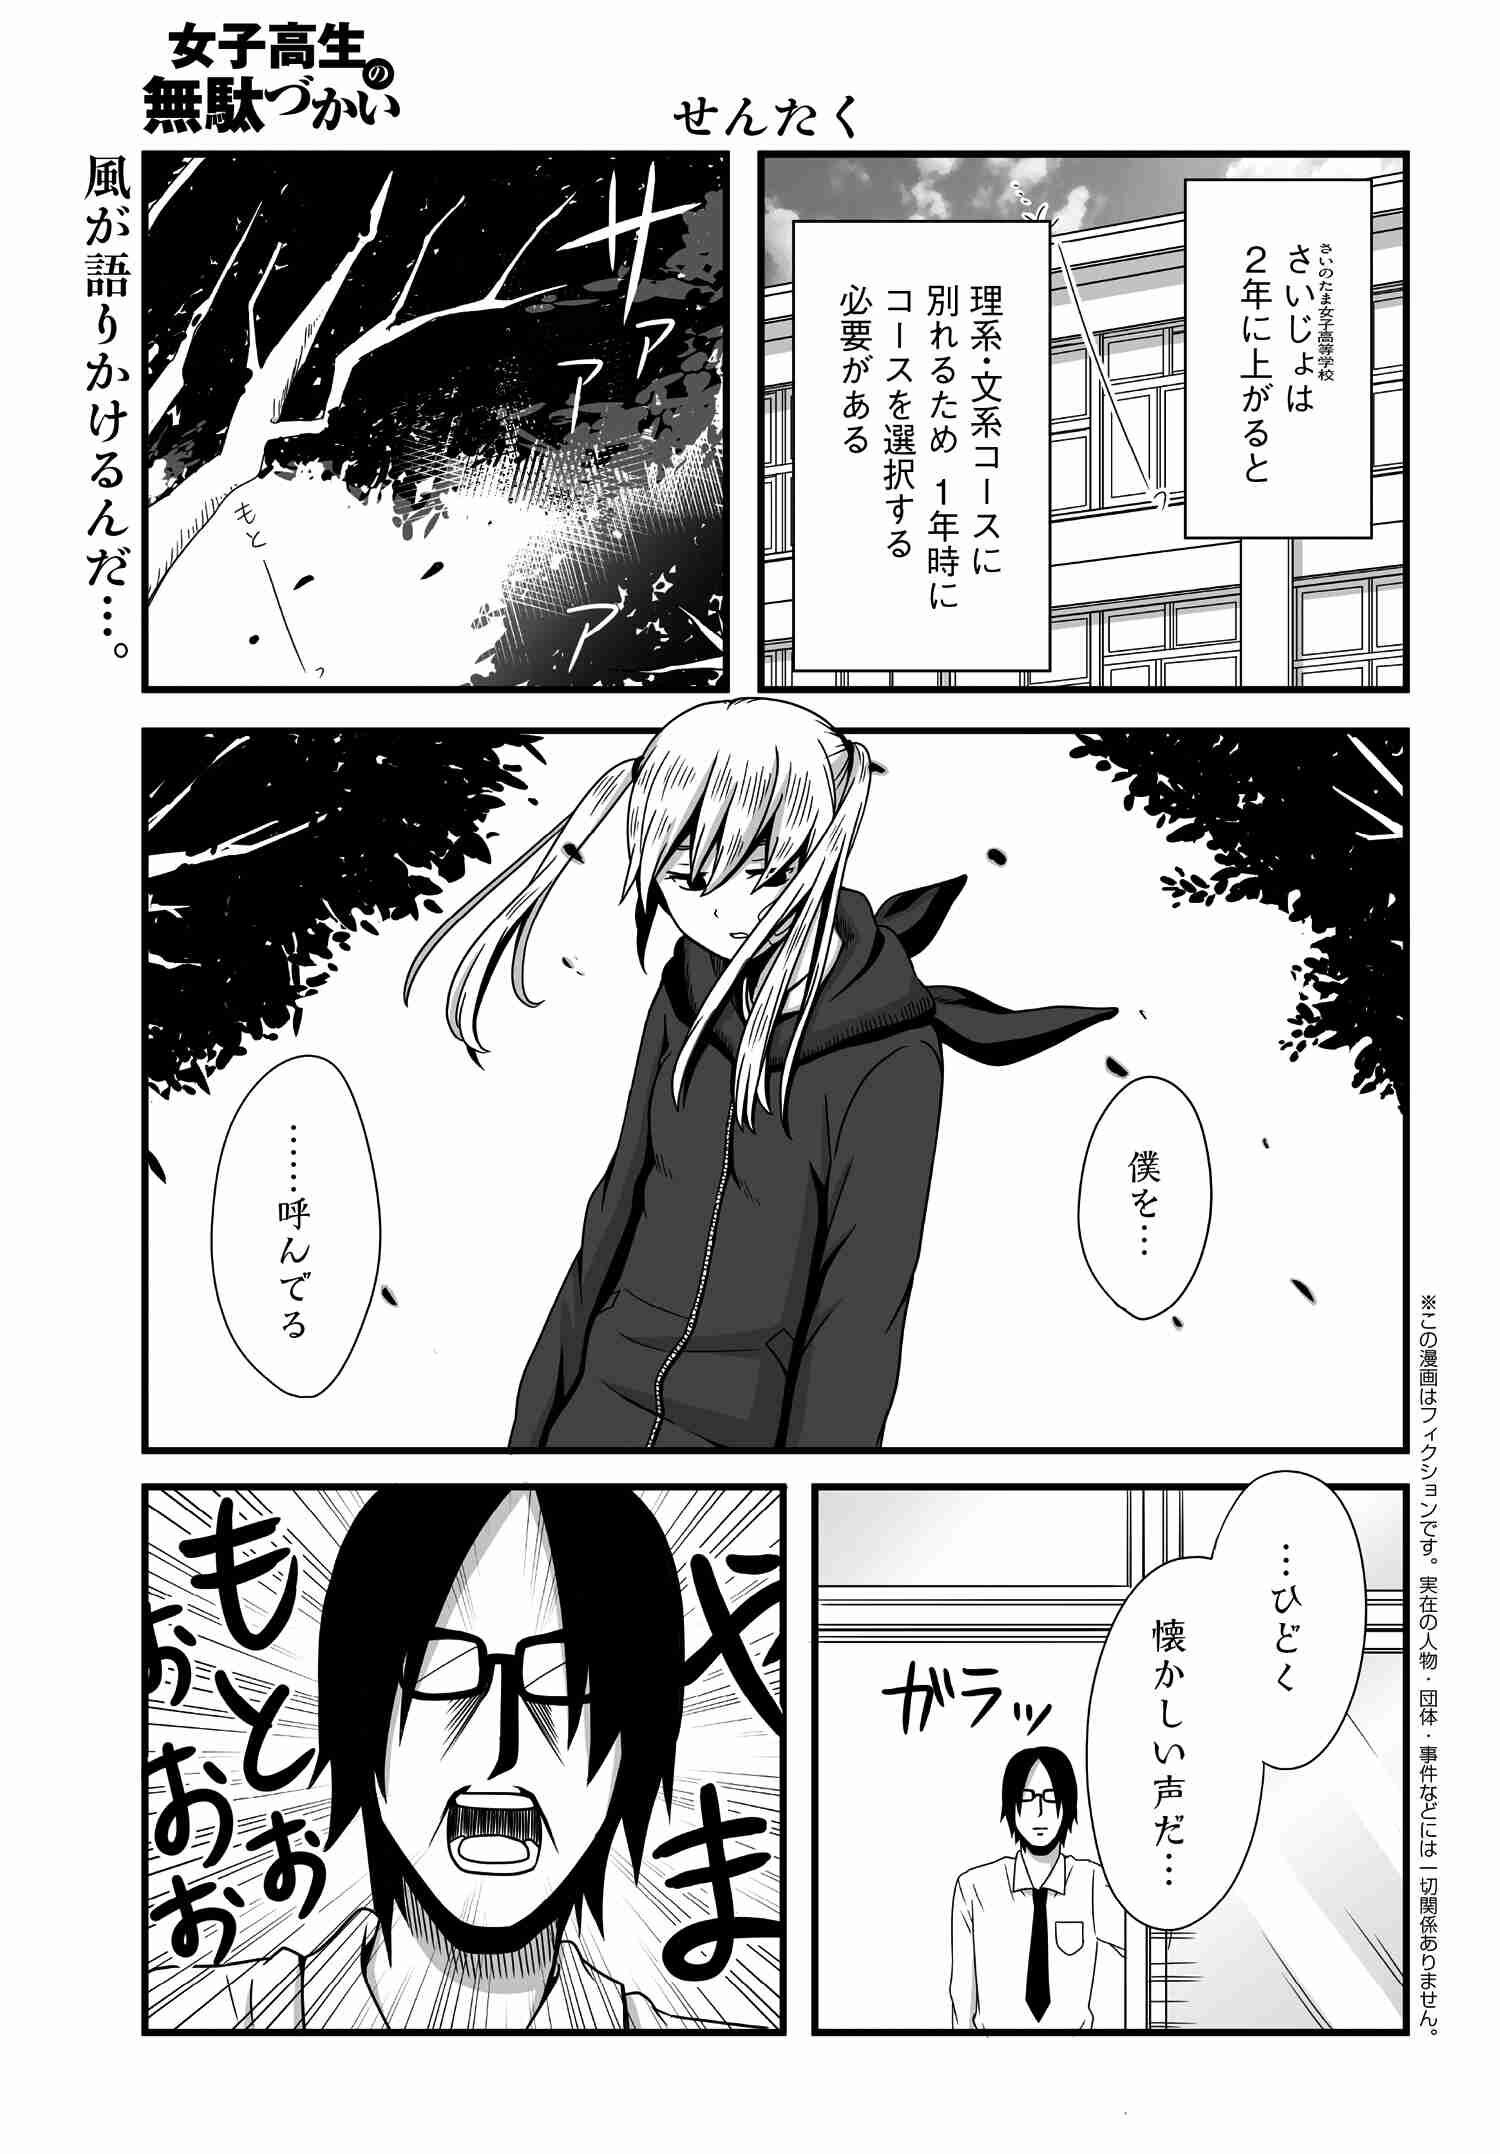 Joshikousei no Mudazukai - Chapter 012 - Page 1